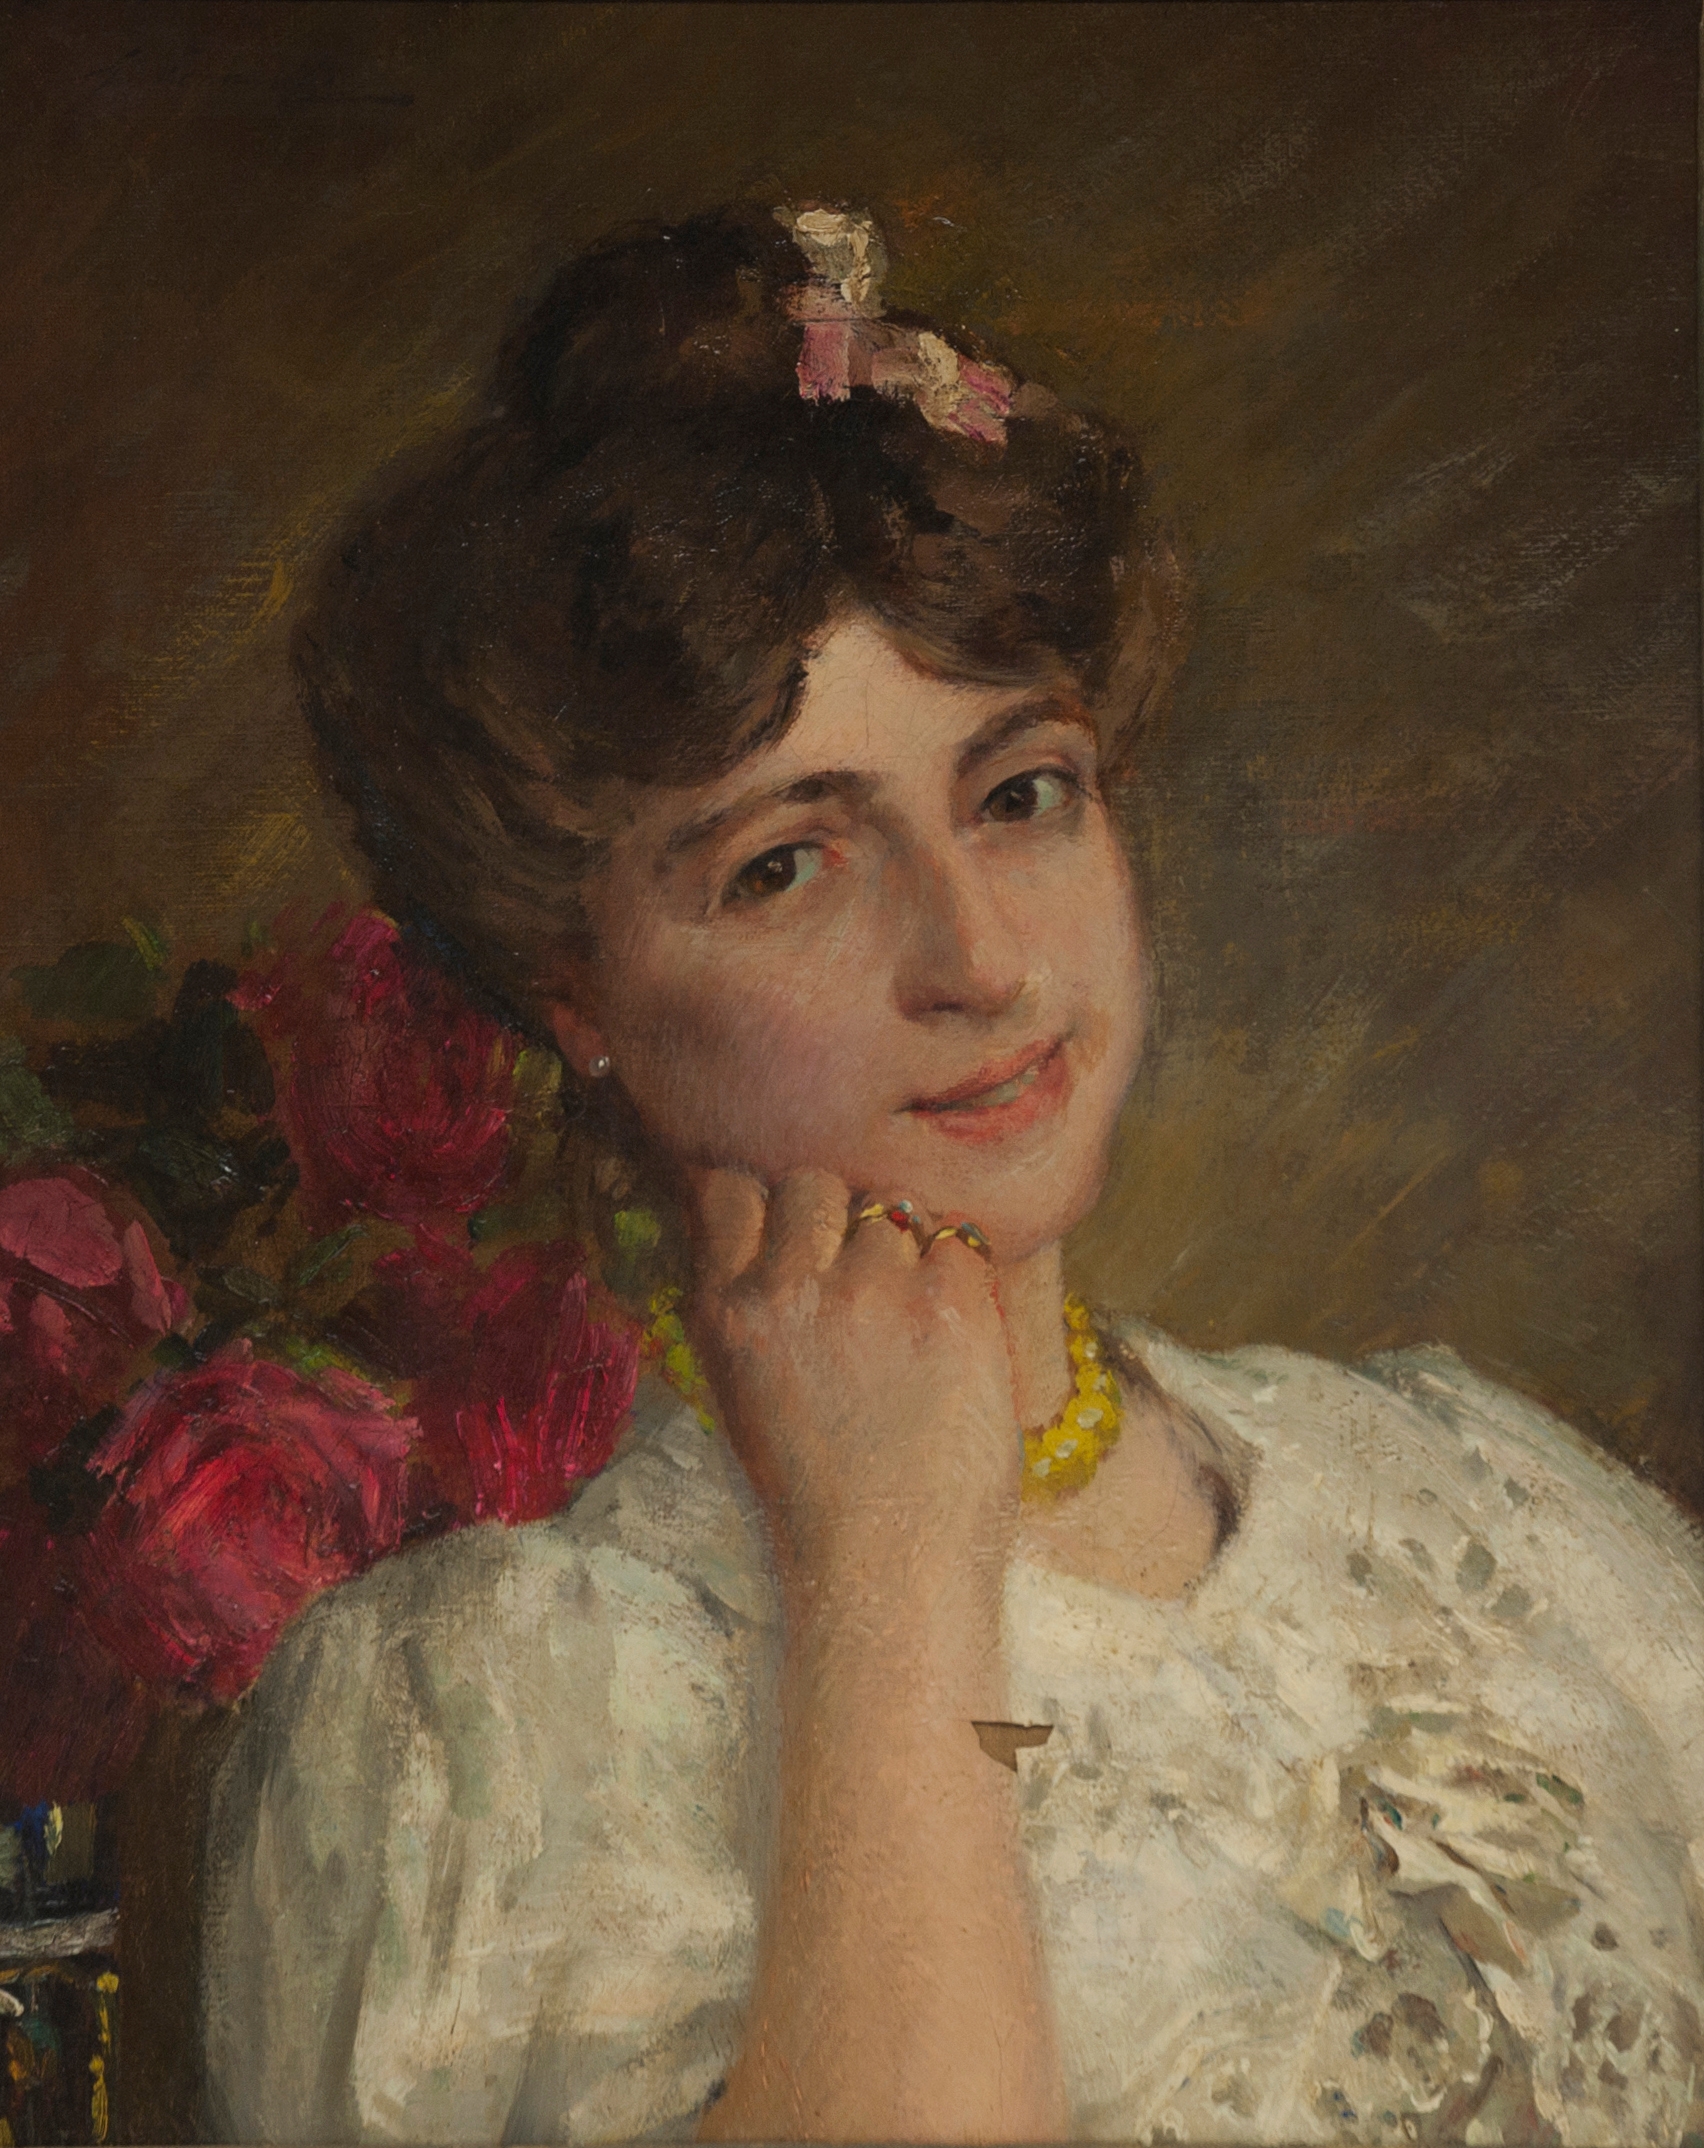 Ritratto femminile con rose rosse by Giuseppe Pennasilico